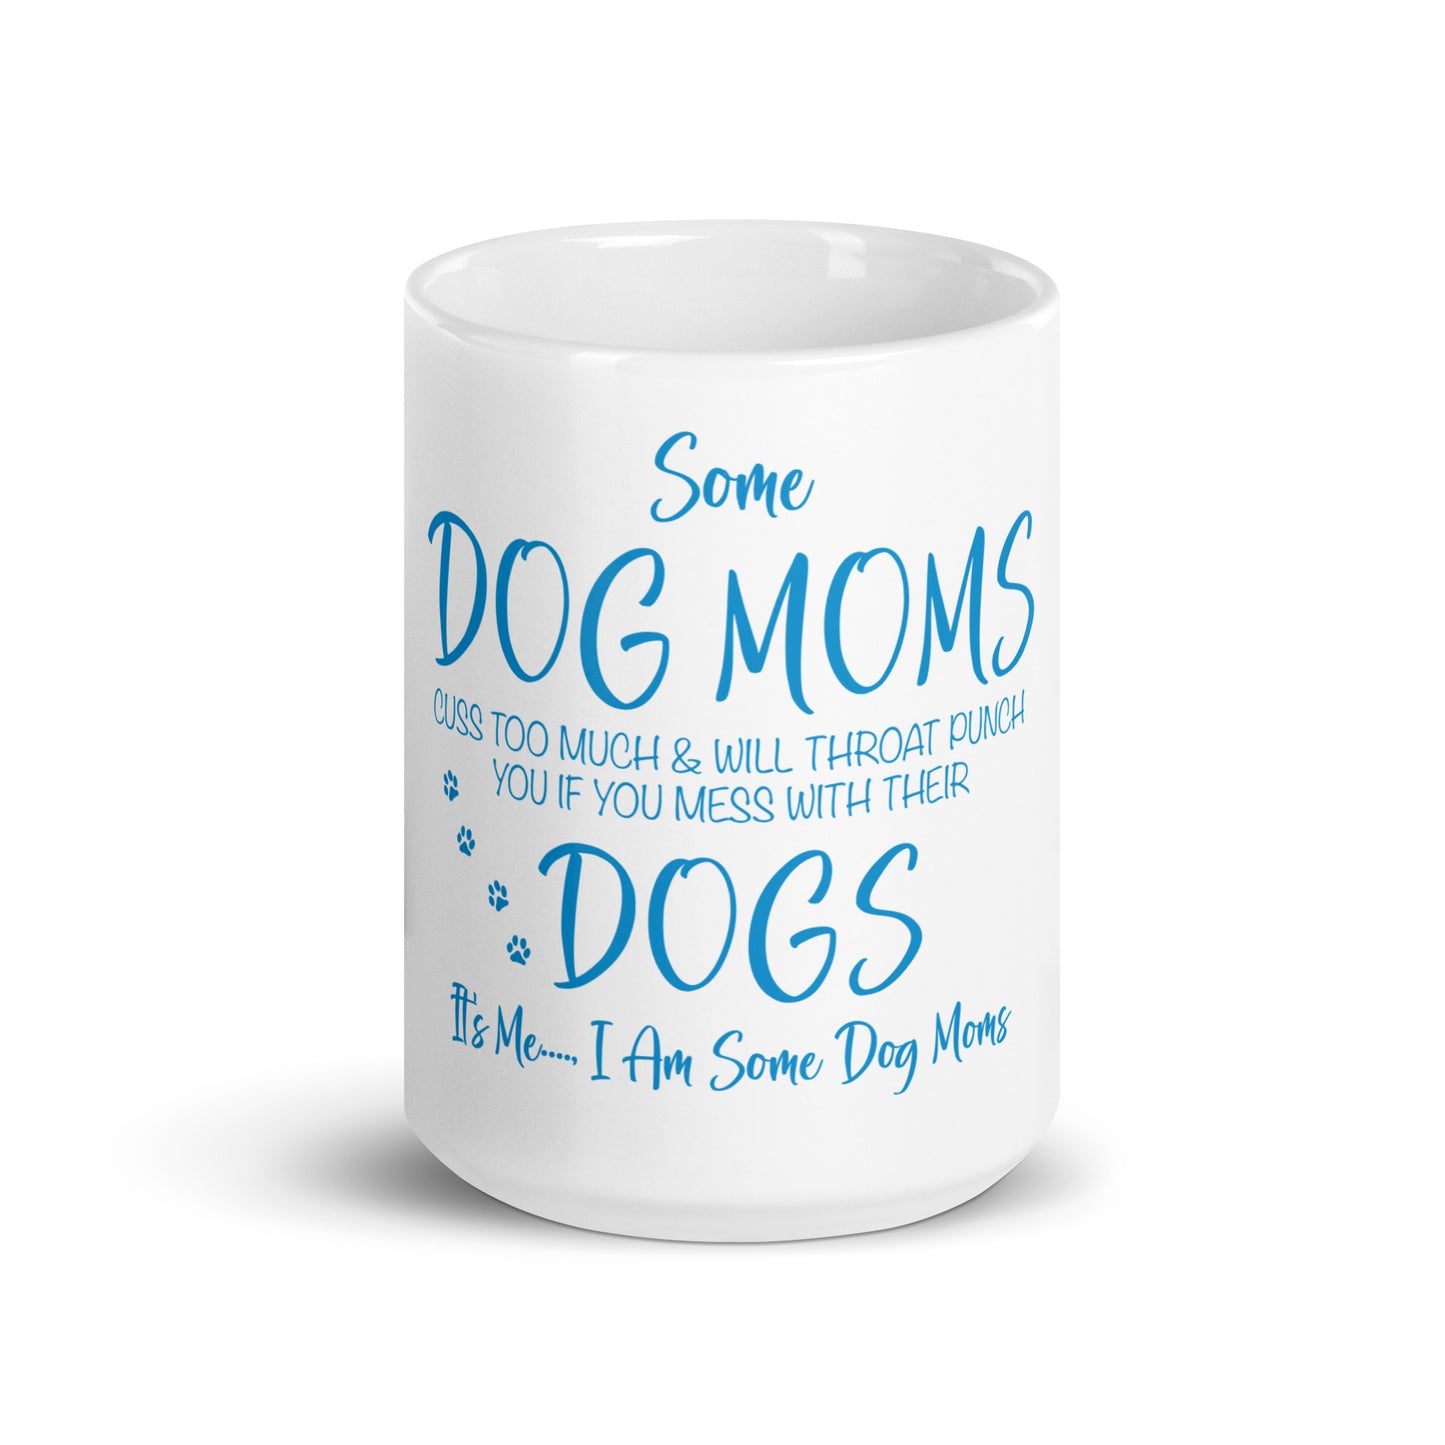 DOG MOM White glossy mug